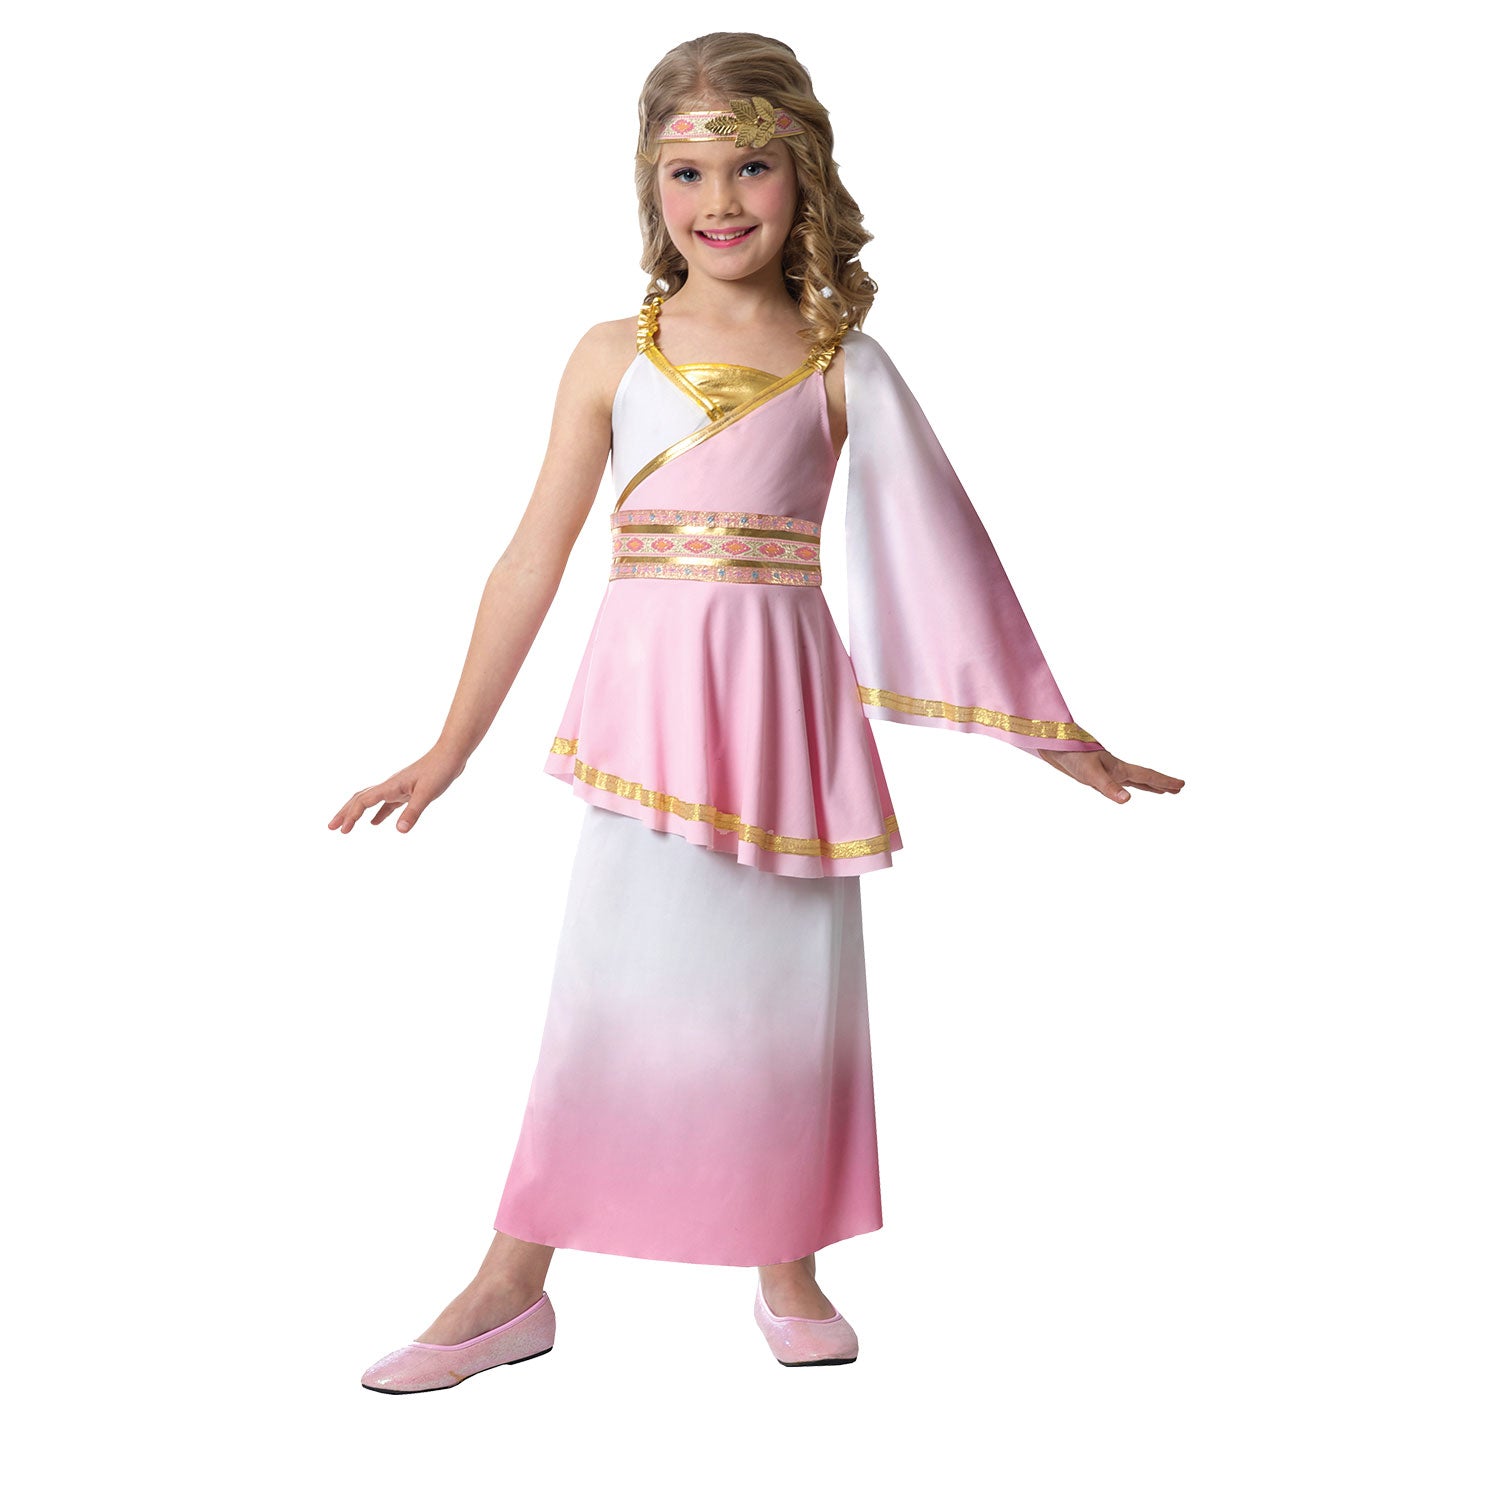 Girls Roman Goddess Costume includes dress and headband